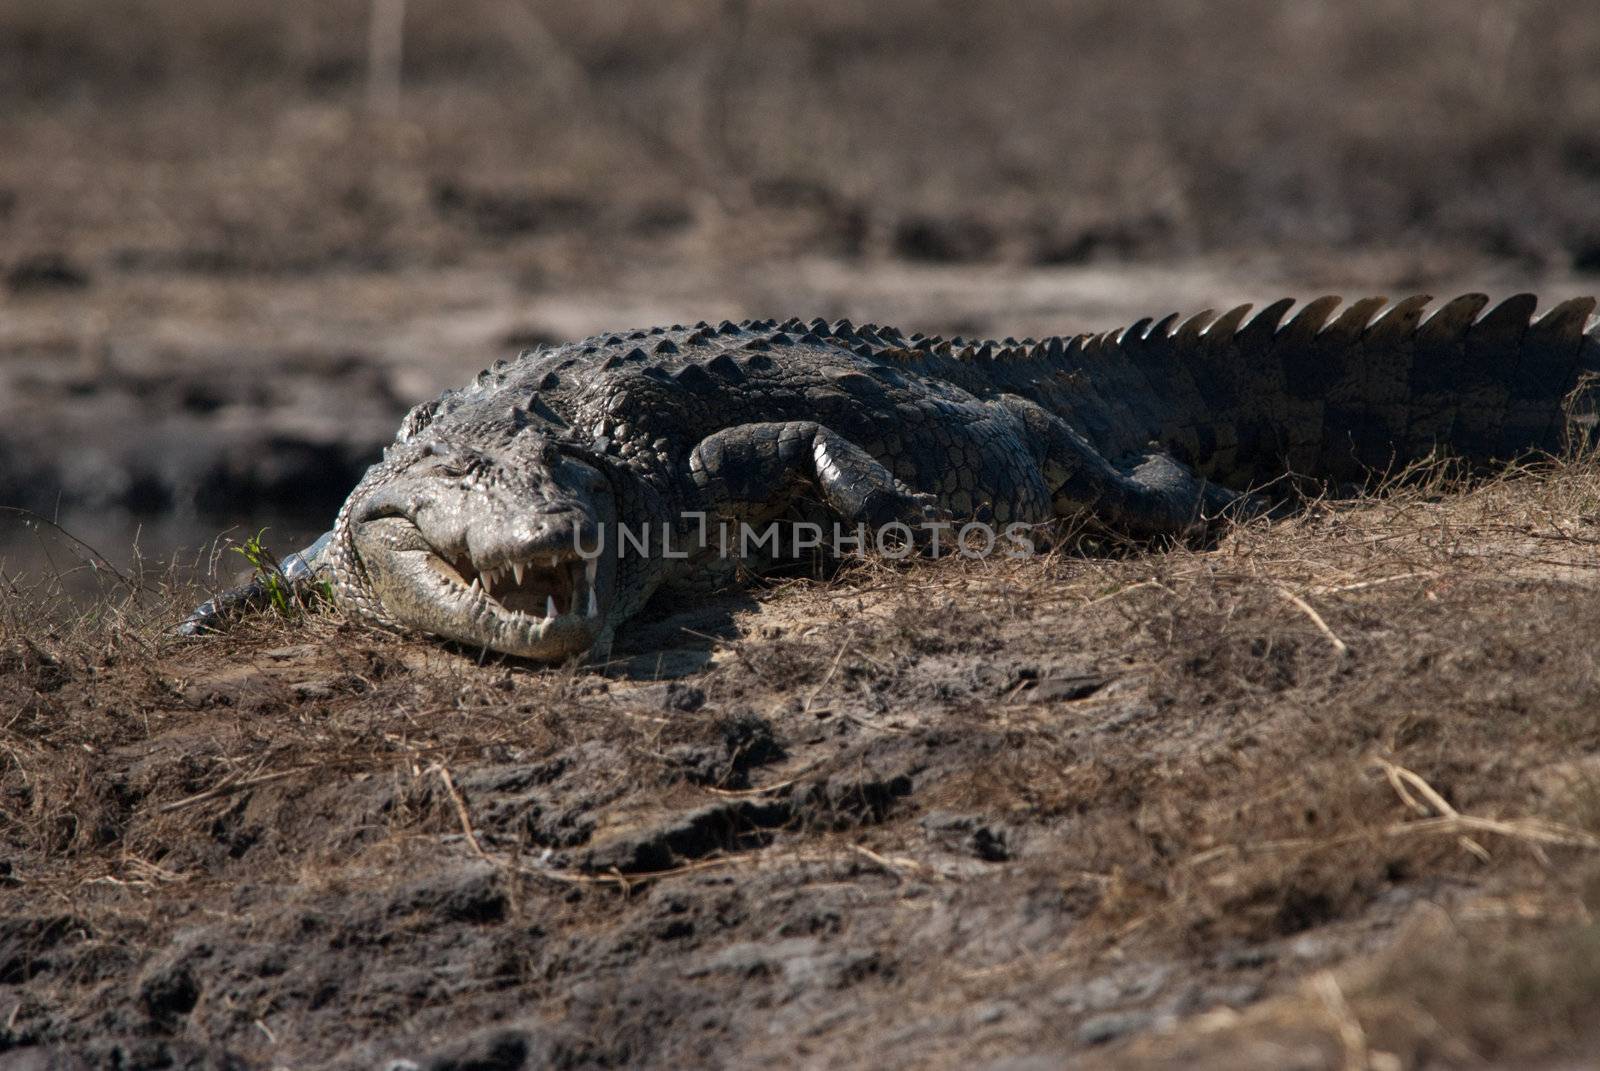 Crocodile baring teeth, Chobe National Park, Botswana